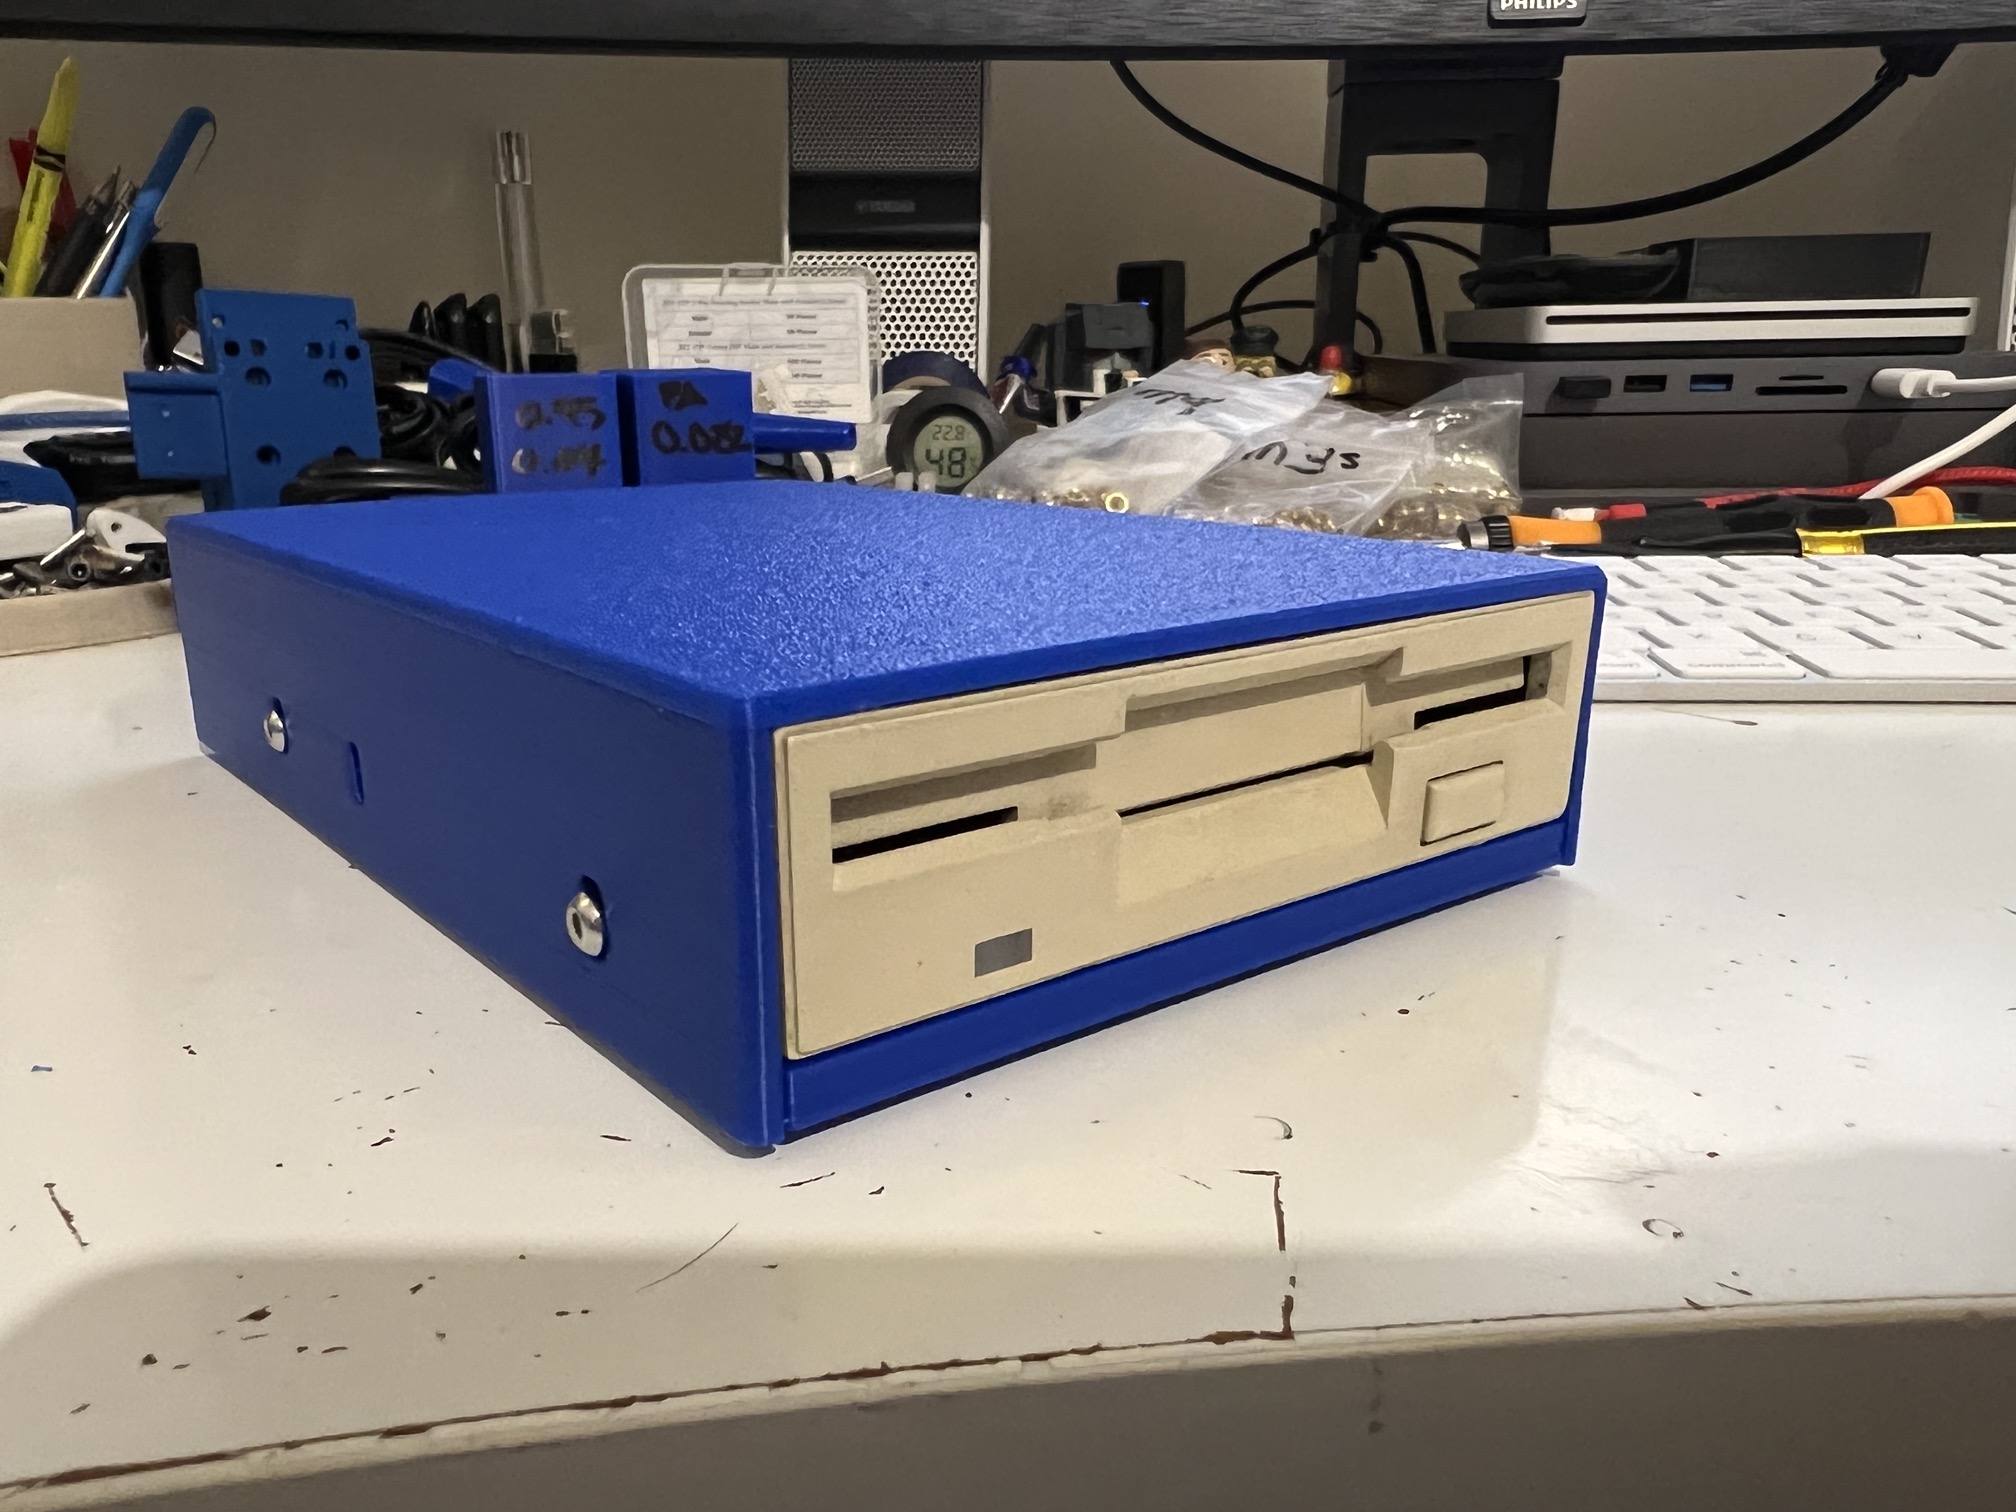 Simple Tandy 1000 External 3.5" or Gotek Floppy Drive Case